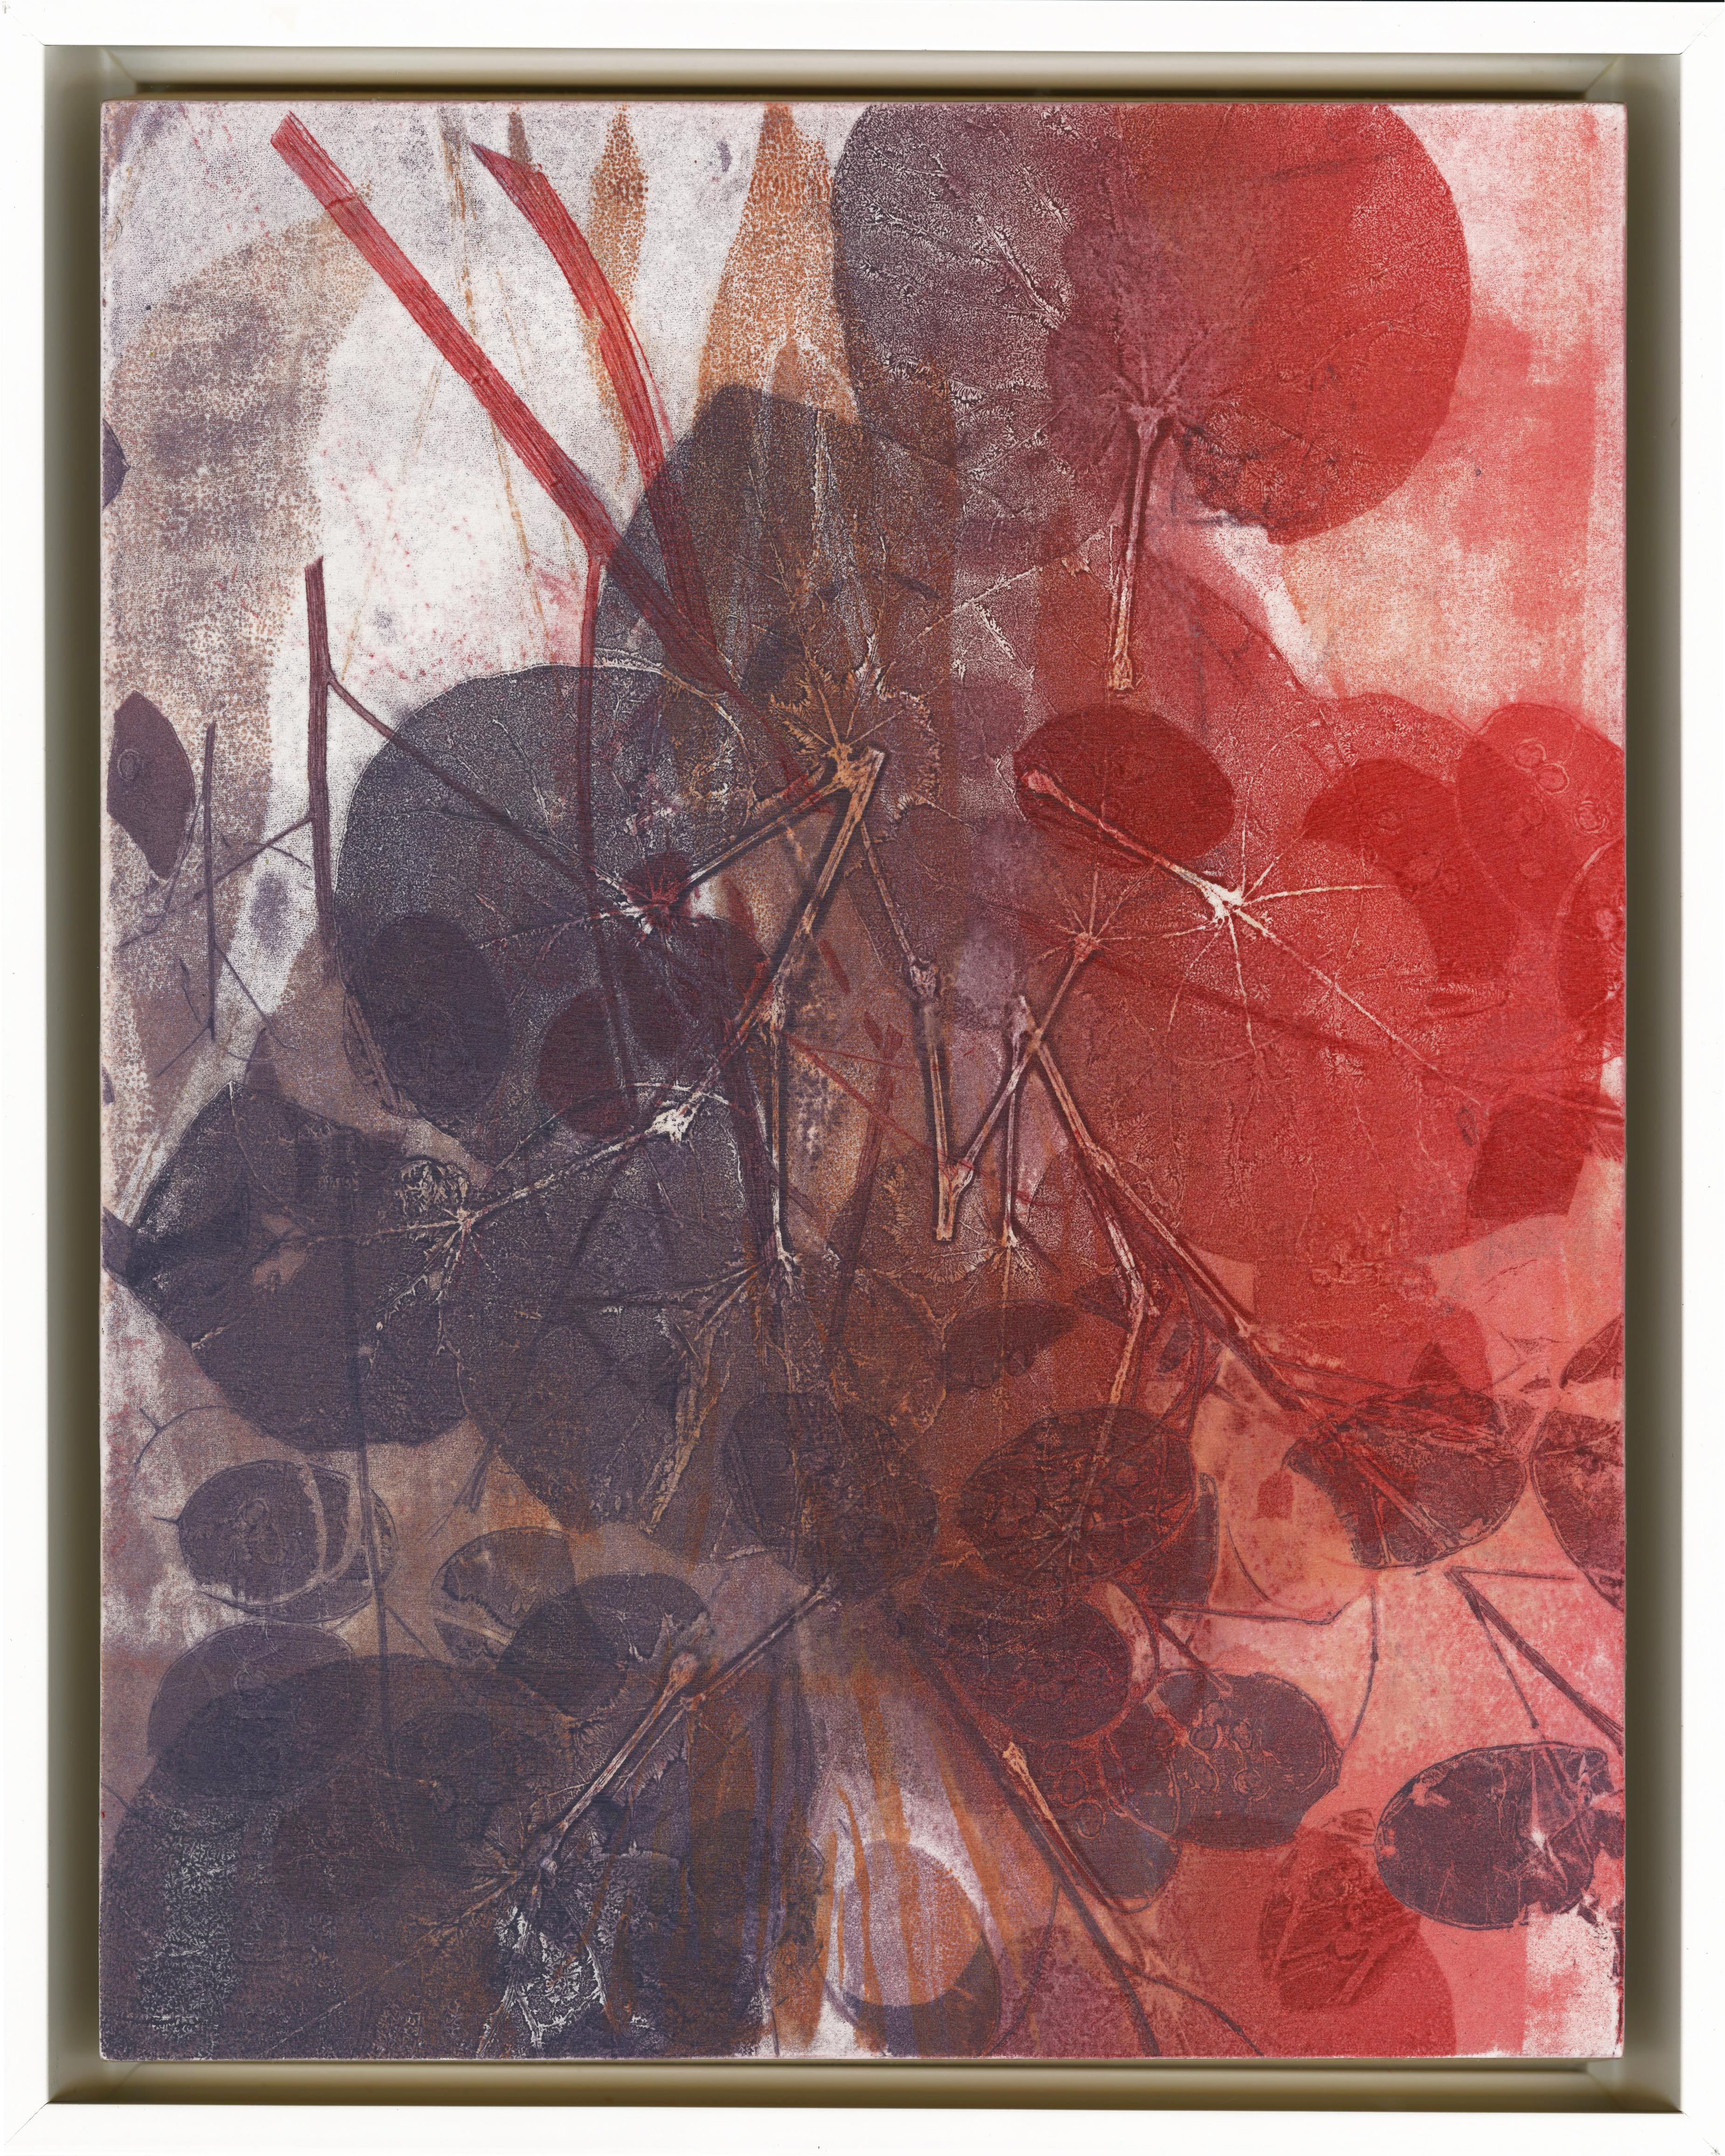 Terni 10-18/Aster Leaf, Grass and Moonwort en violet + écharpe - Print de Nina Tichava